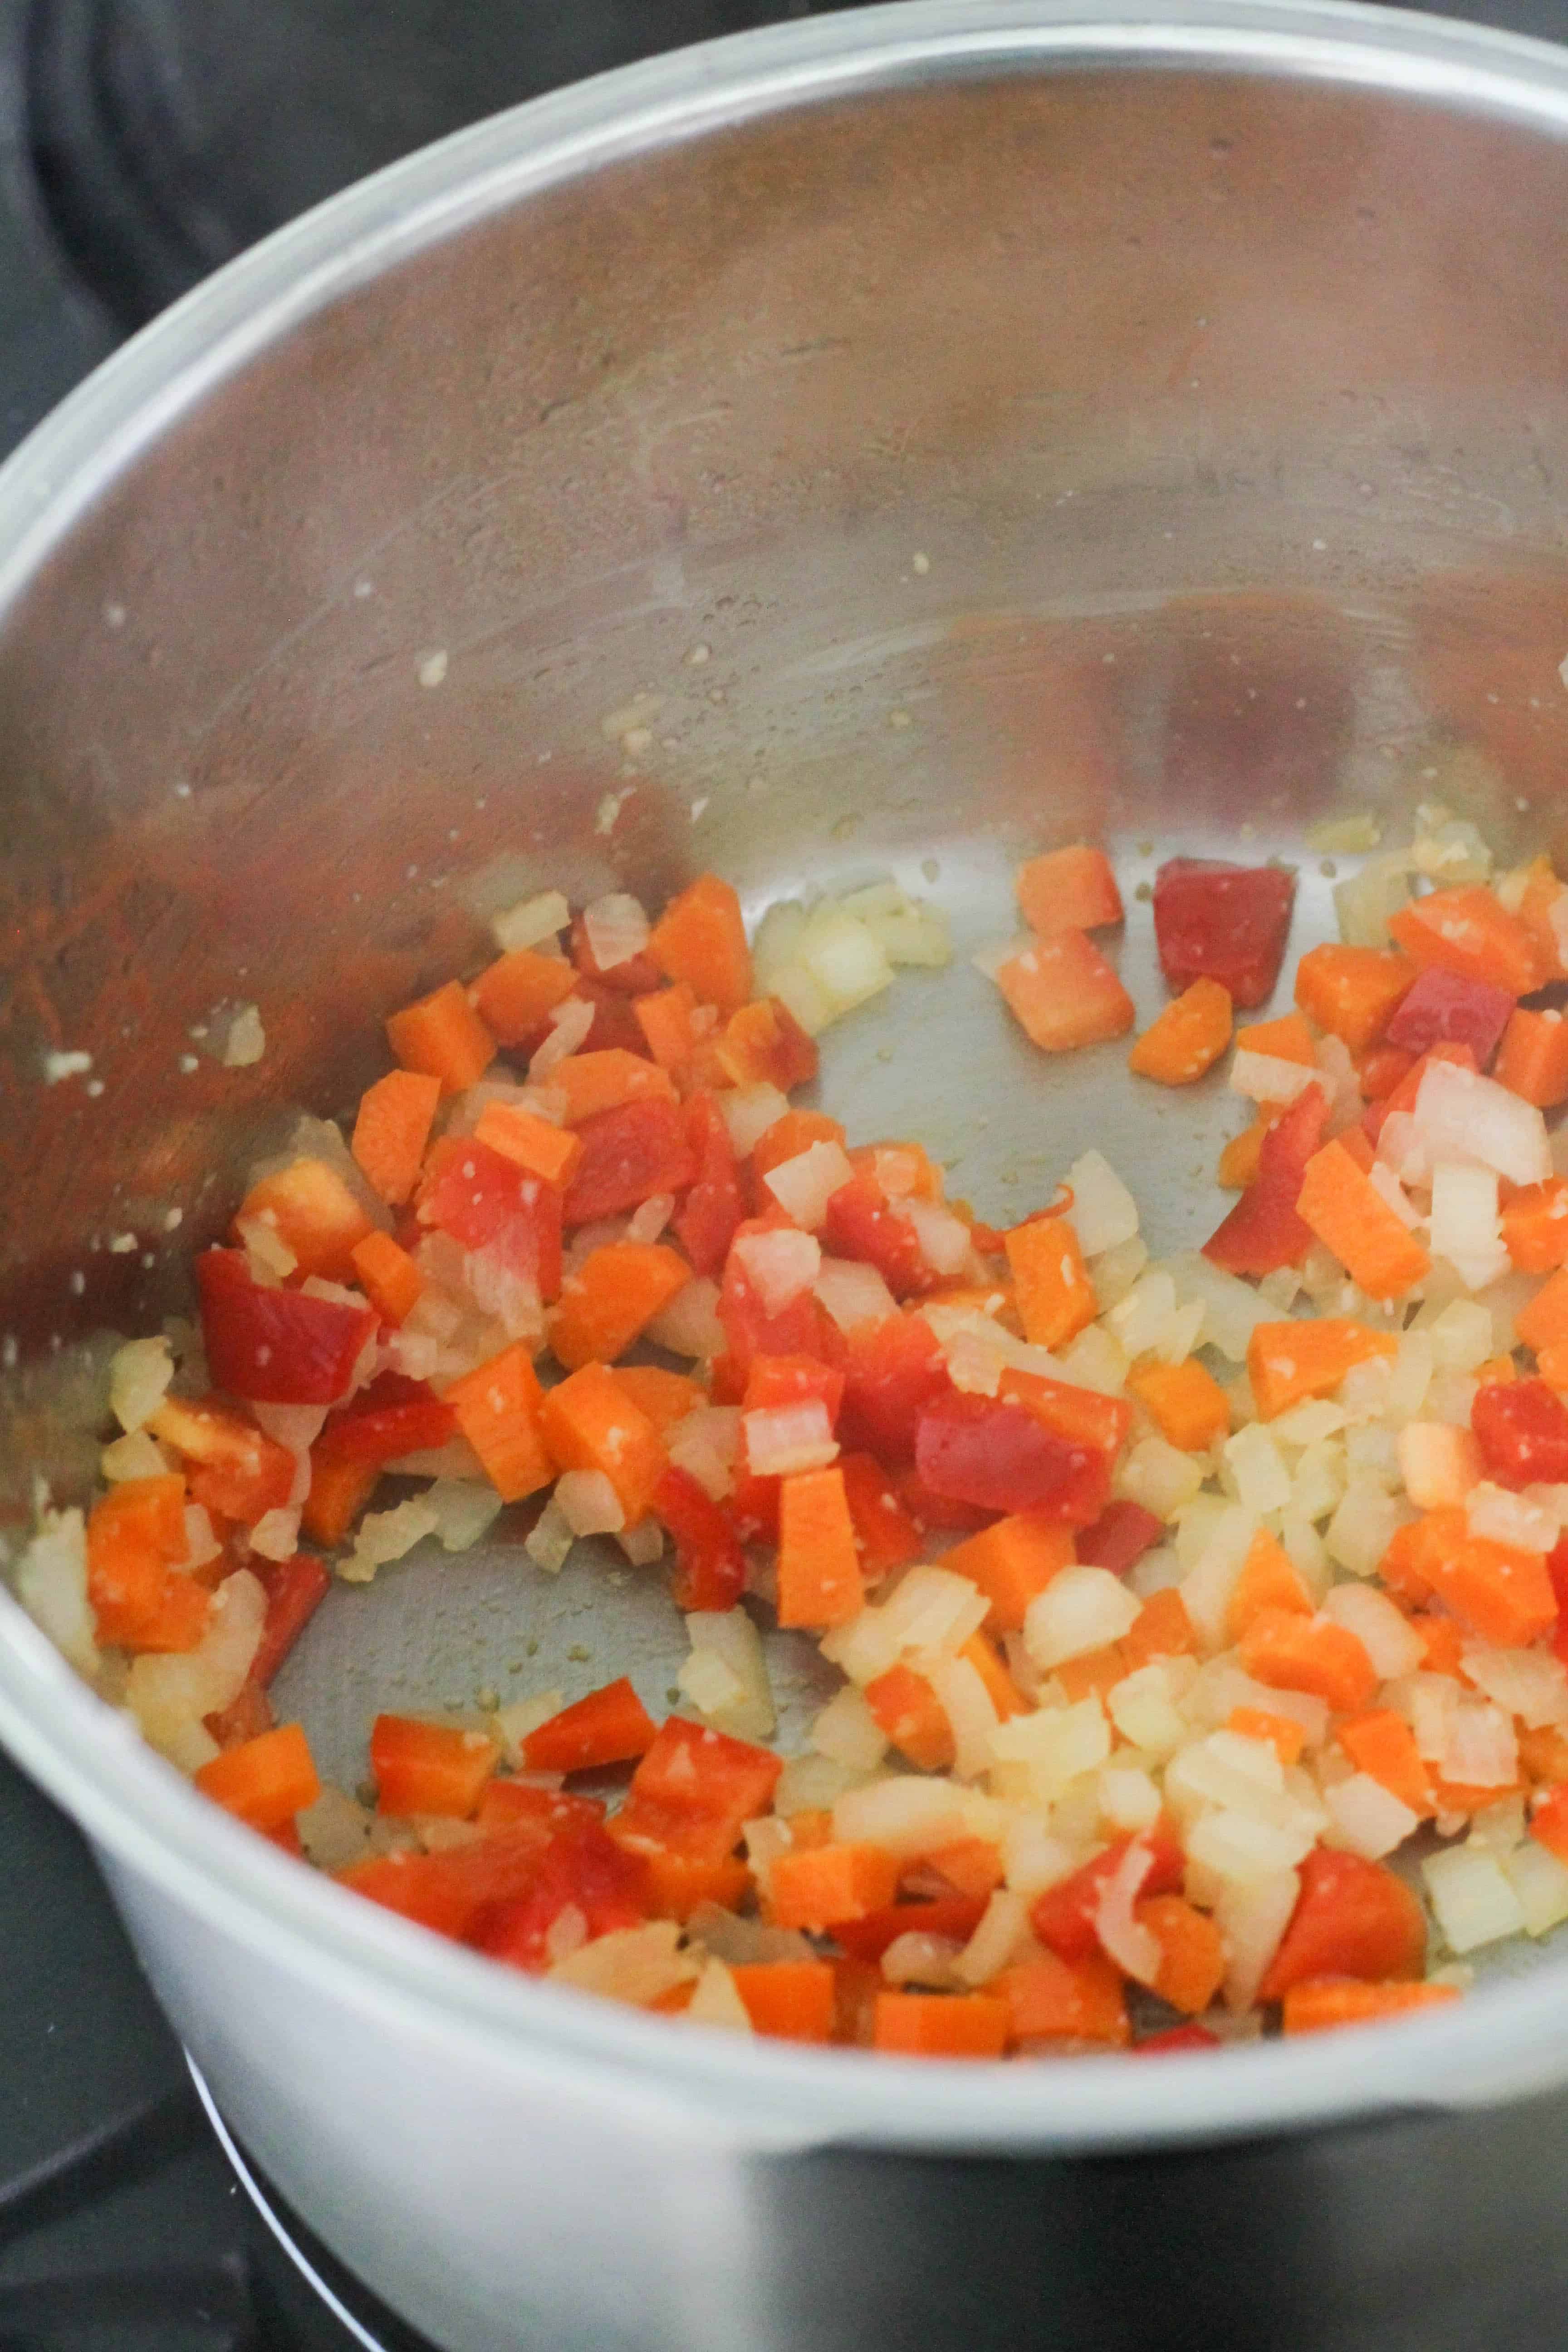 diced veggies in a saucepan.